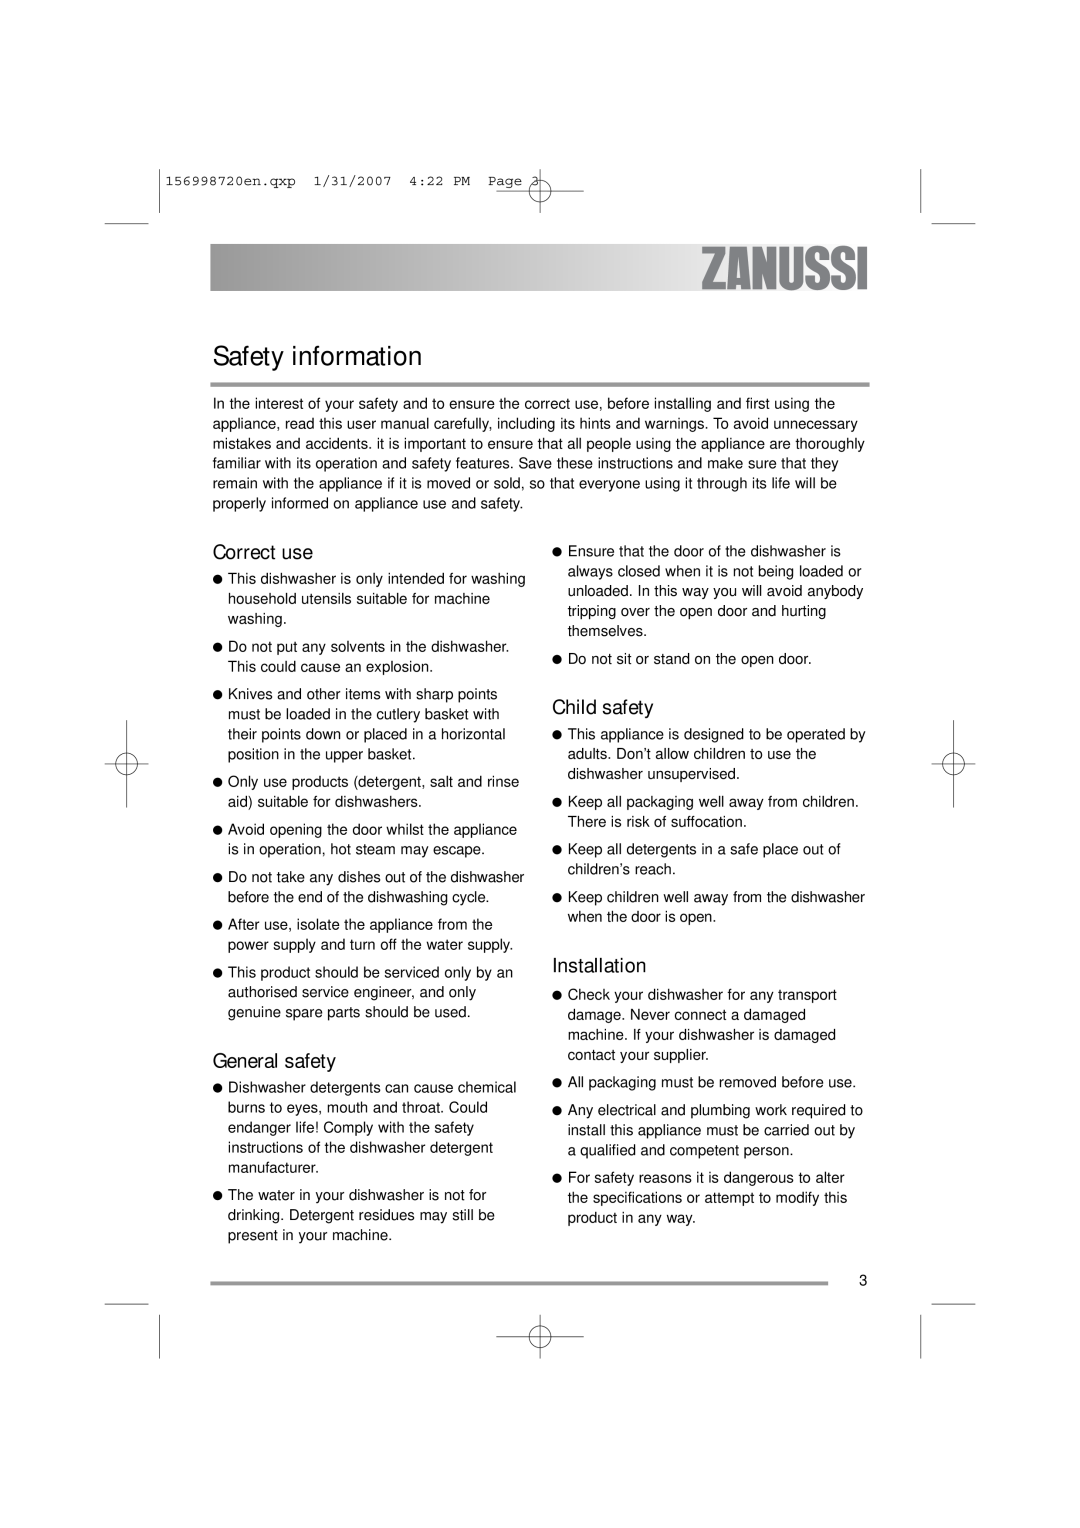 Zanussi ZDI 100 manual Safety information, Correct use, General safety, Child safety, Installation 